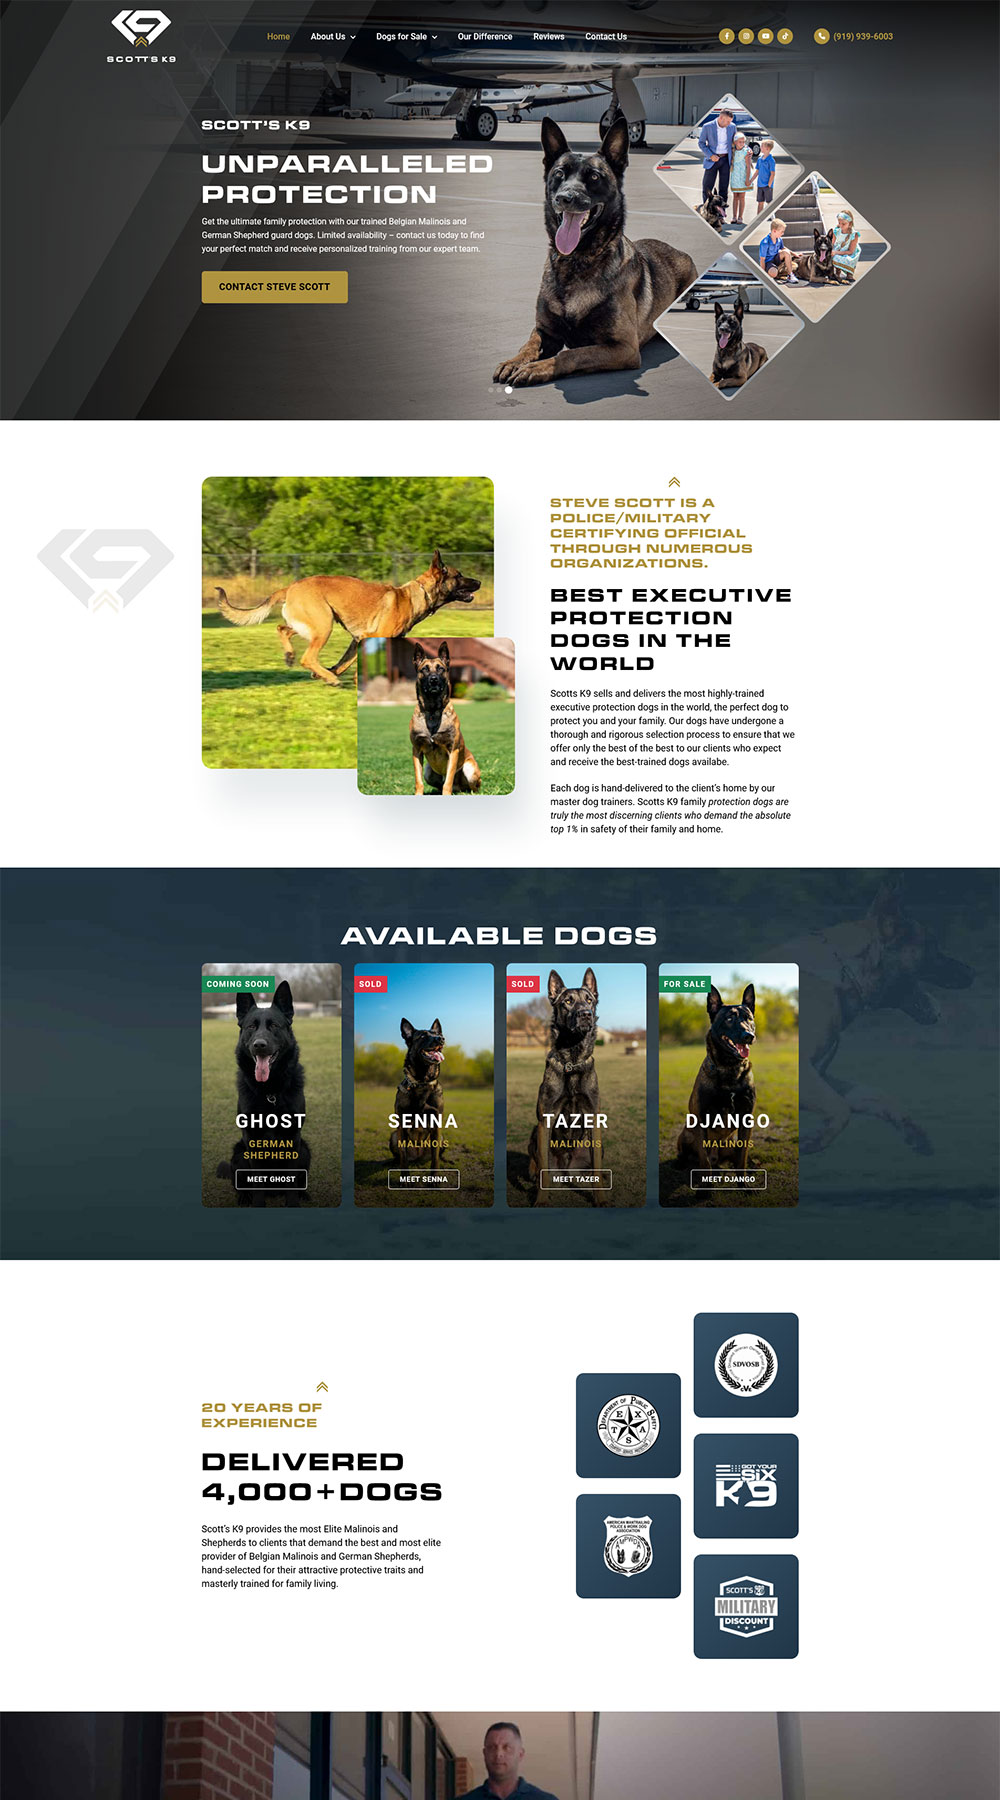 Website design in WordPress for Elite Protection Dogs by Scott's K